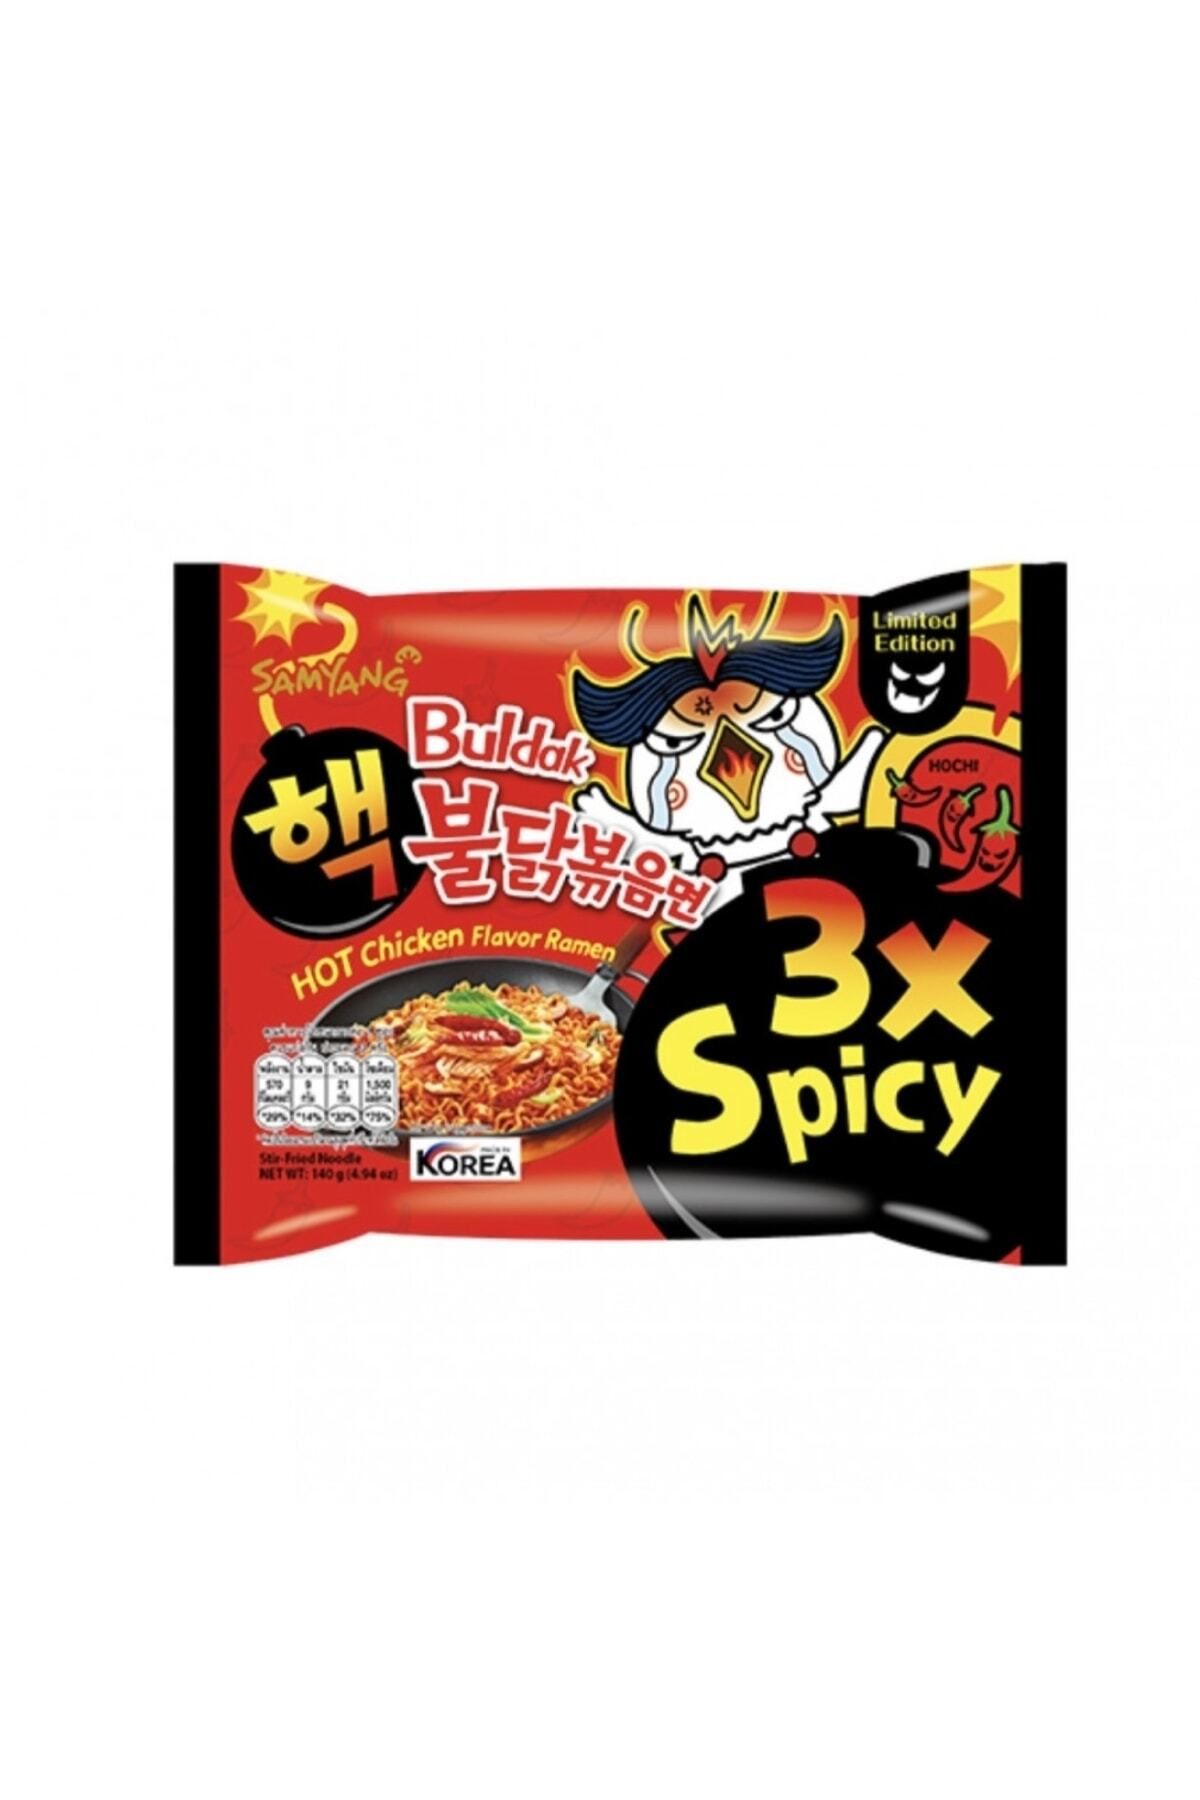 samyang Buldak 3x Spicy Noodle